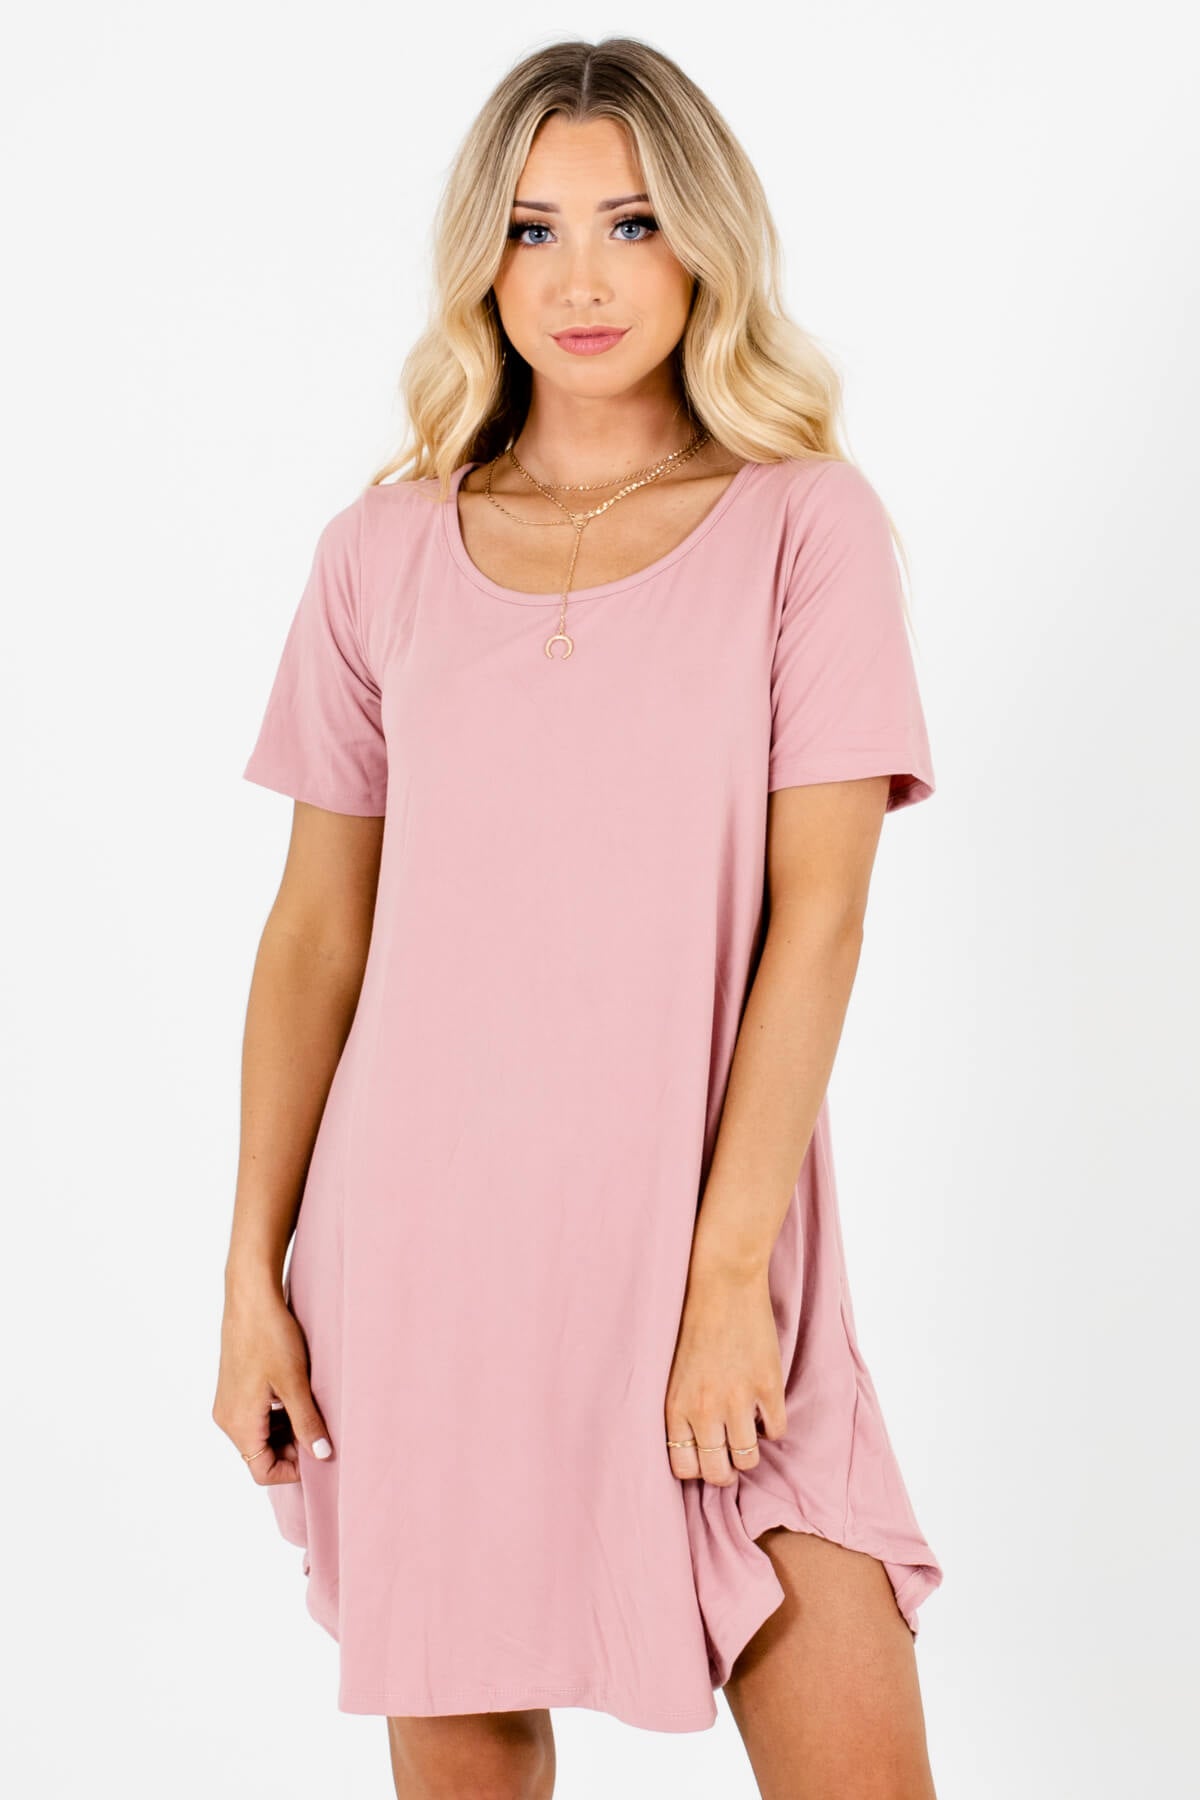 Pink Super Soft Stretchy Comfy Boutique T-Shirt Mini Dresses